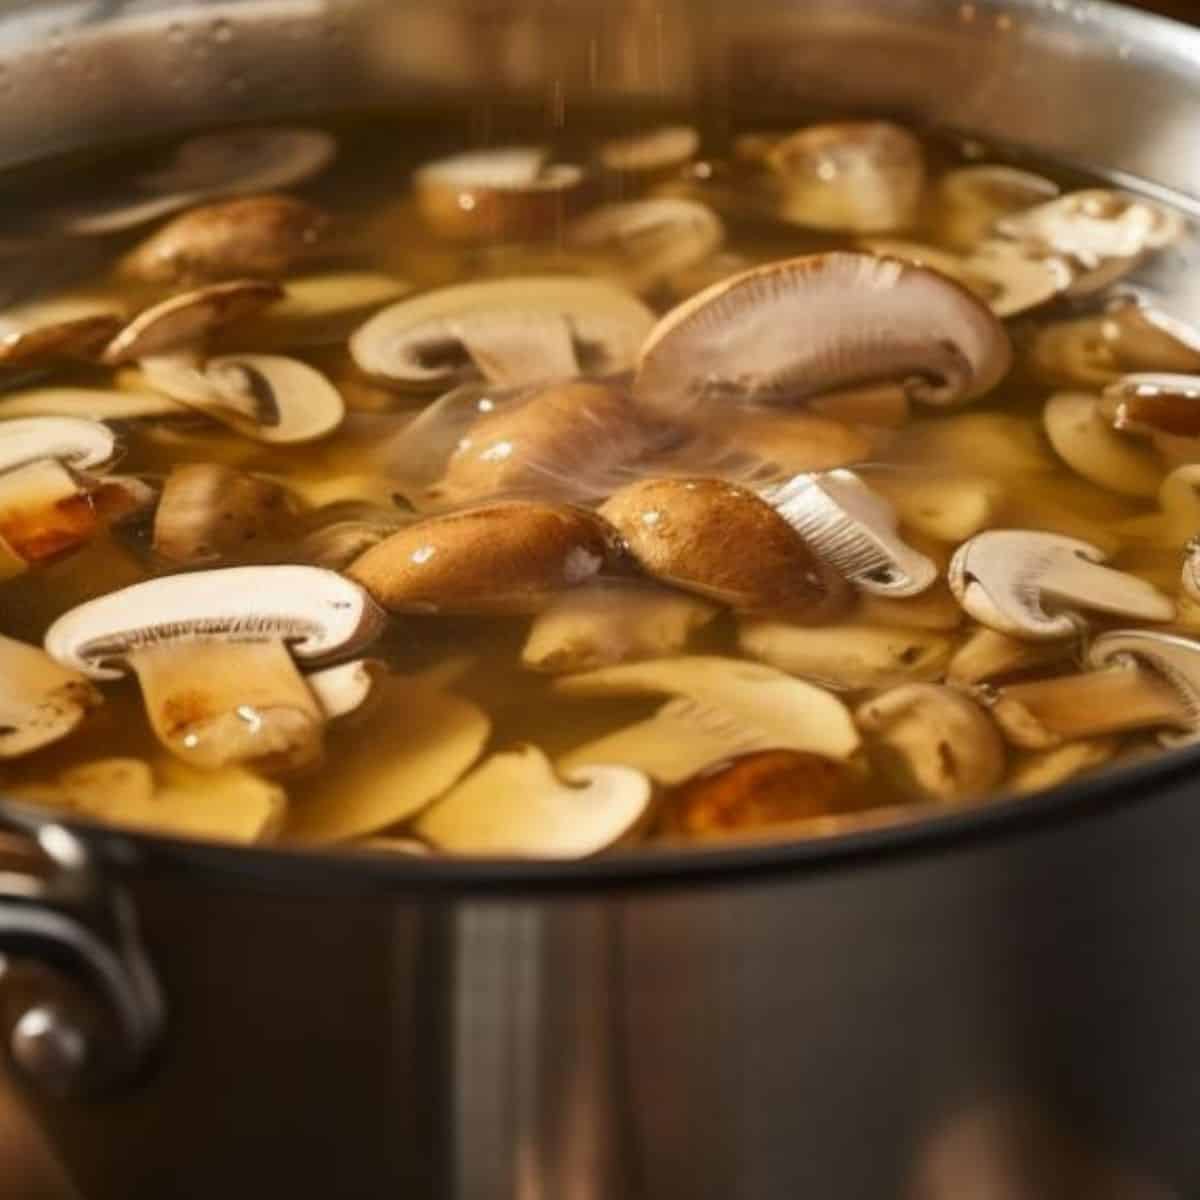 boiling mushrooms in large stock pot